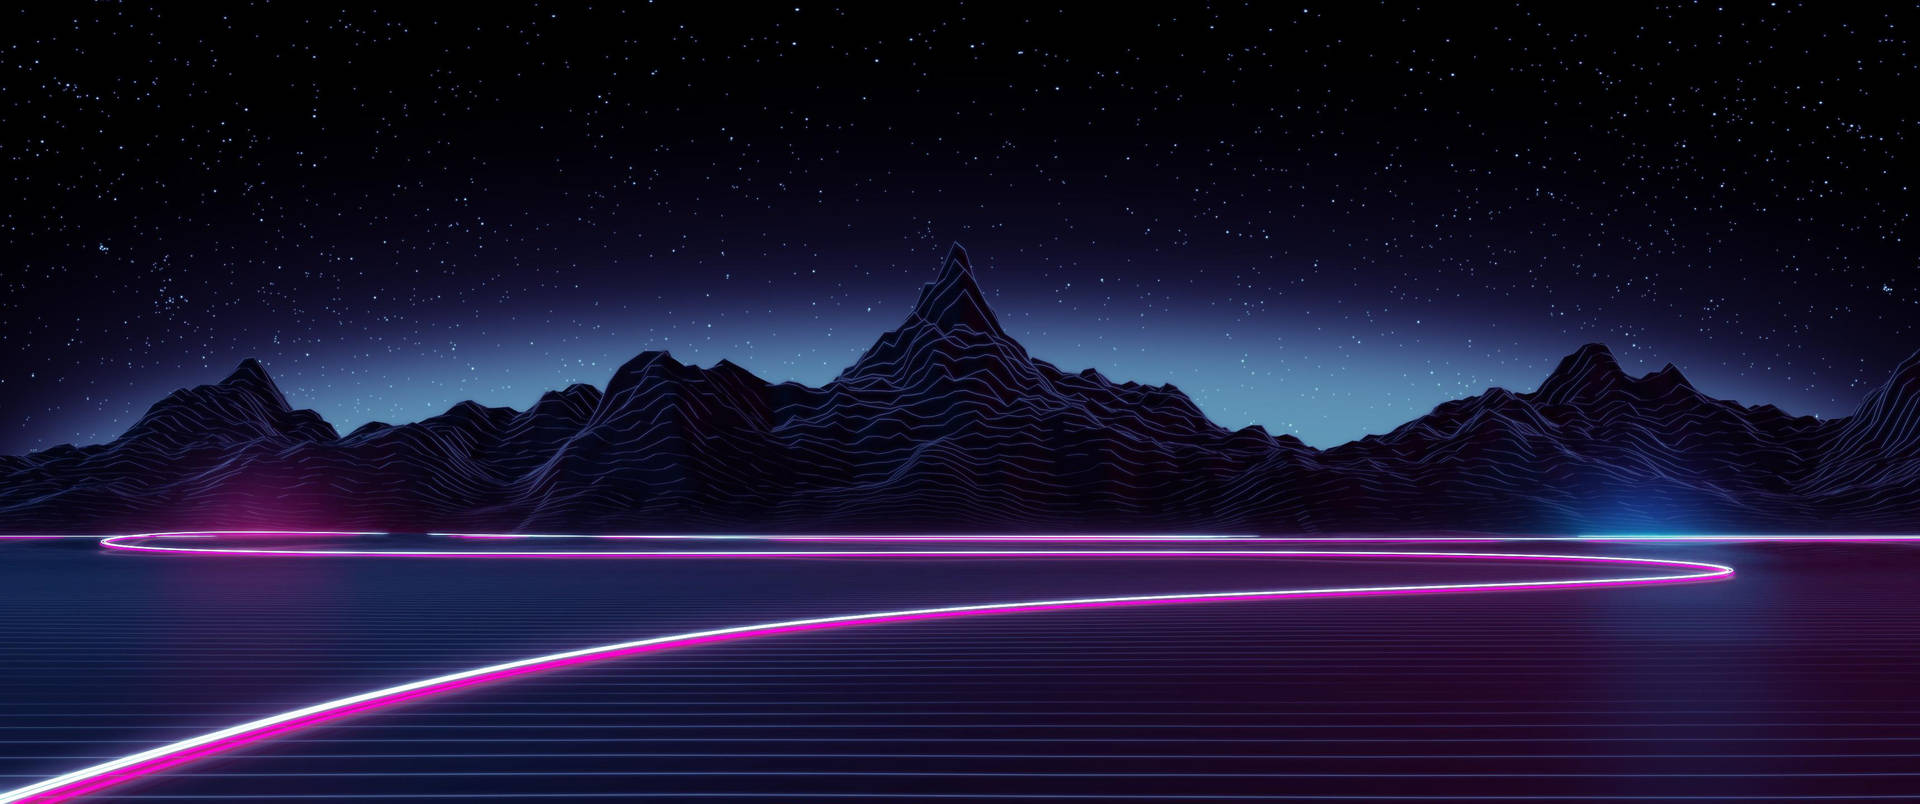 Neon Aesthetic Tumblr Mountain Scenery Background